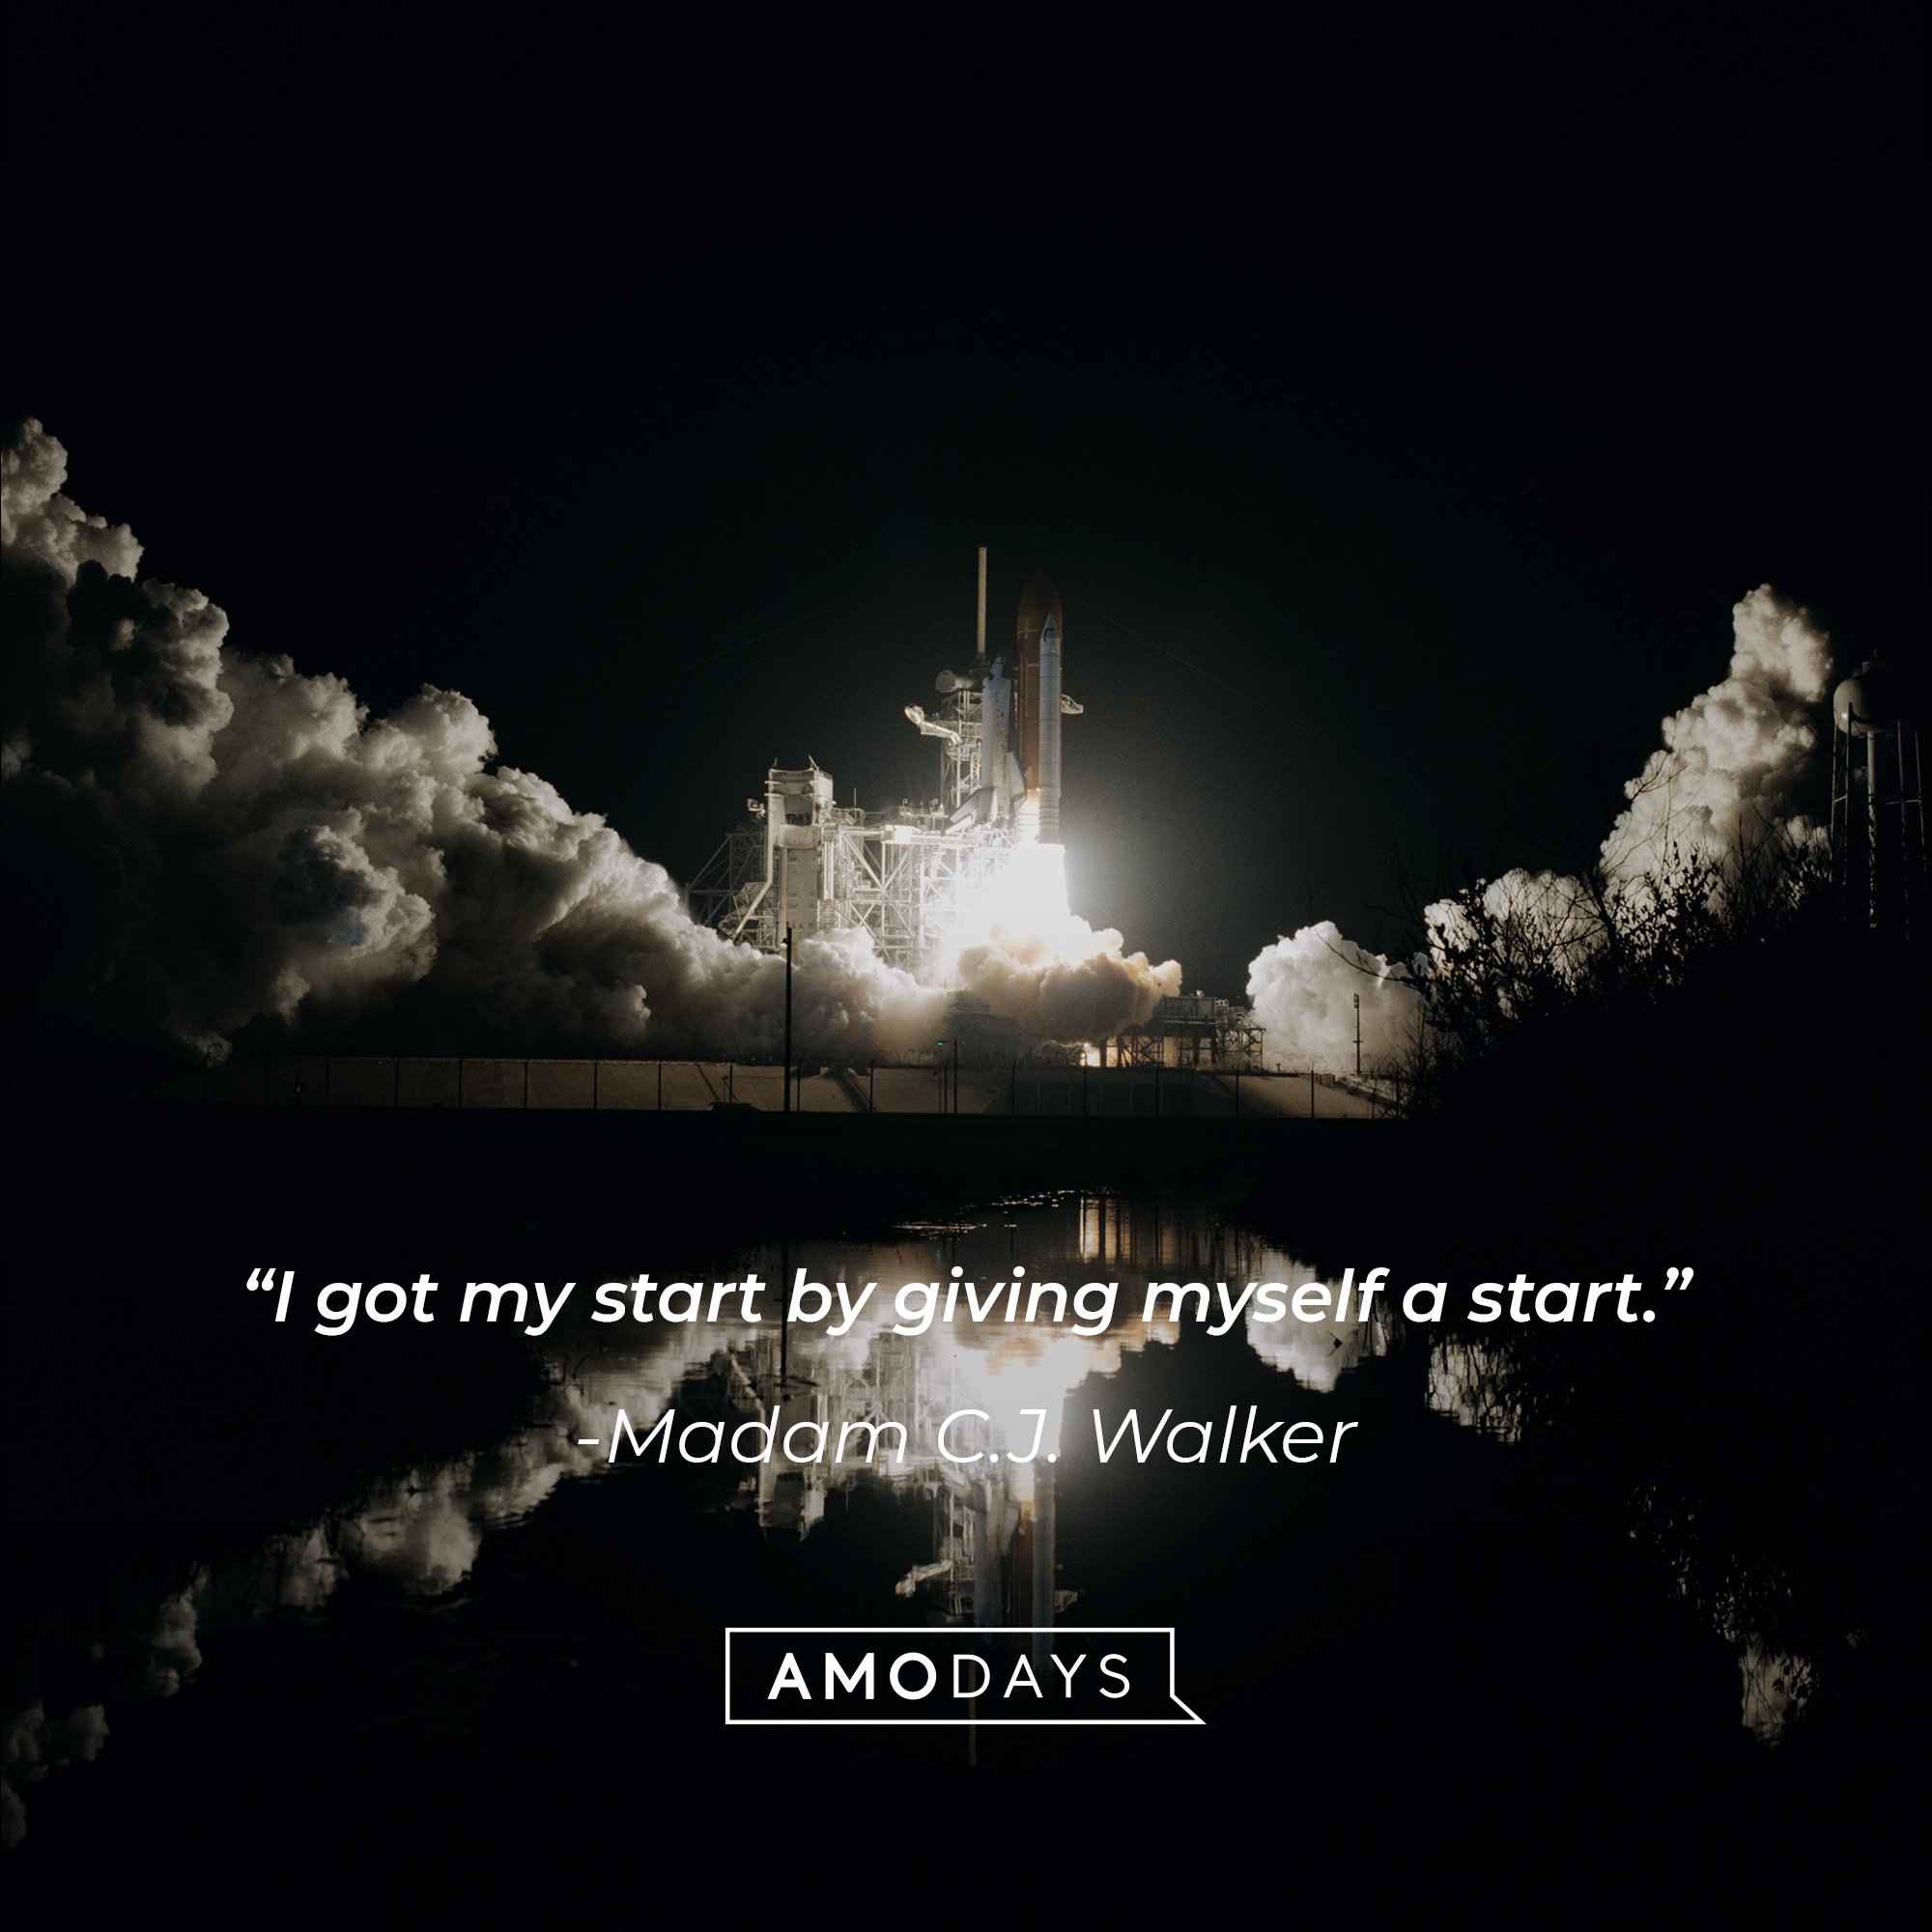 Madam C.J. Walker's quote: "I got my start by giving myself a start." | Image: AmoDays